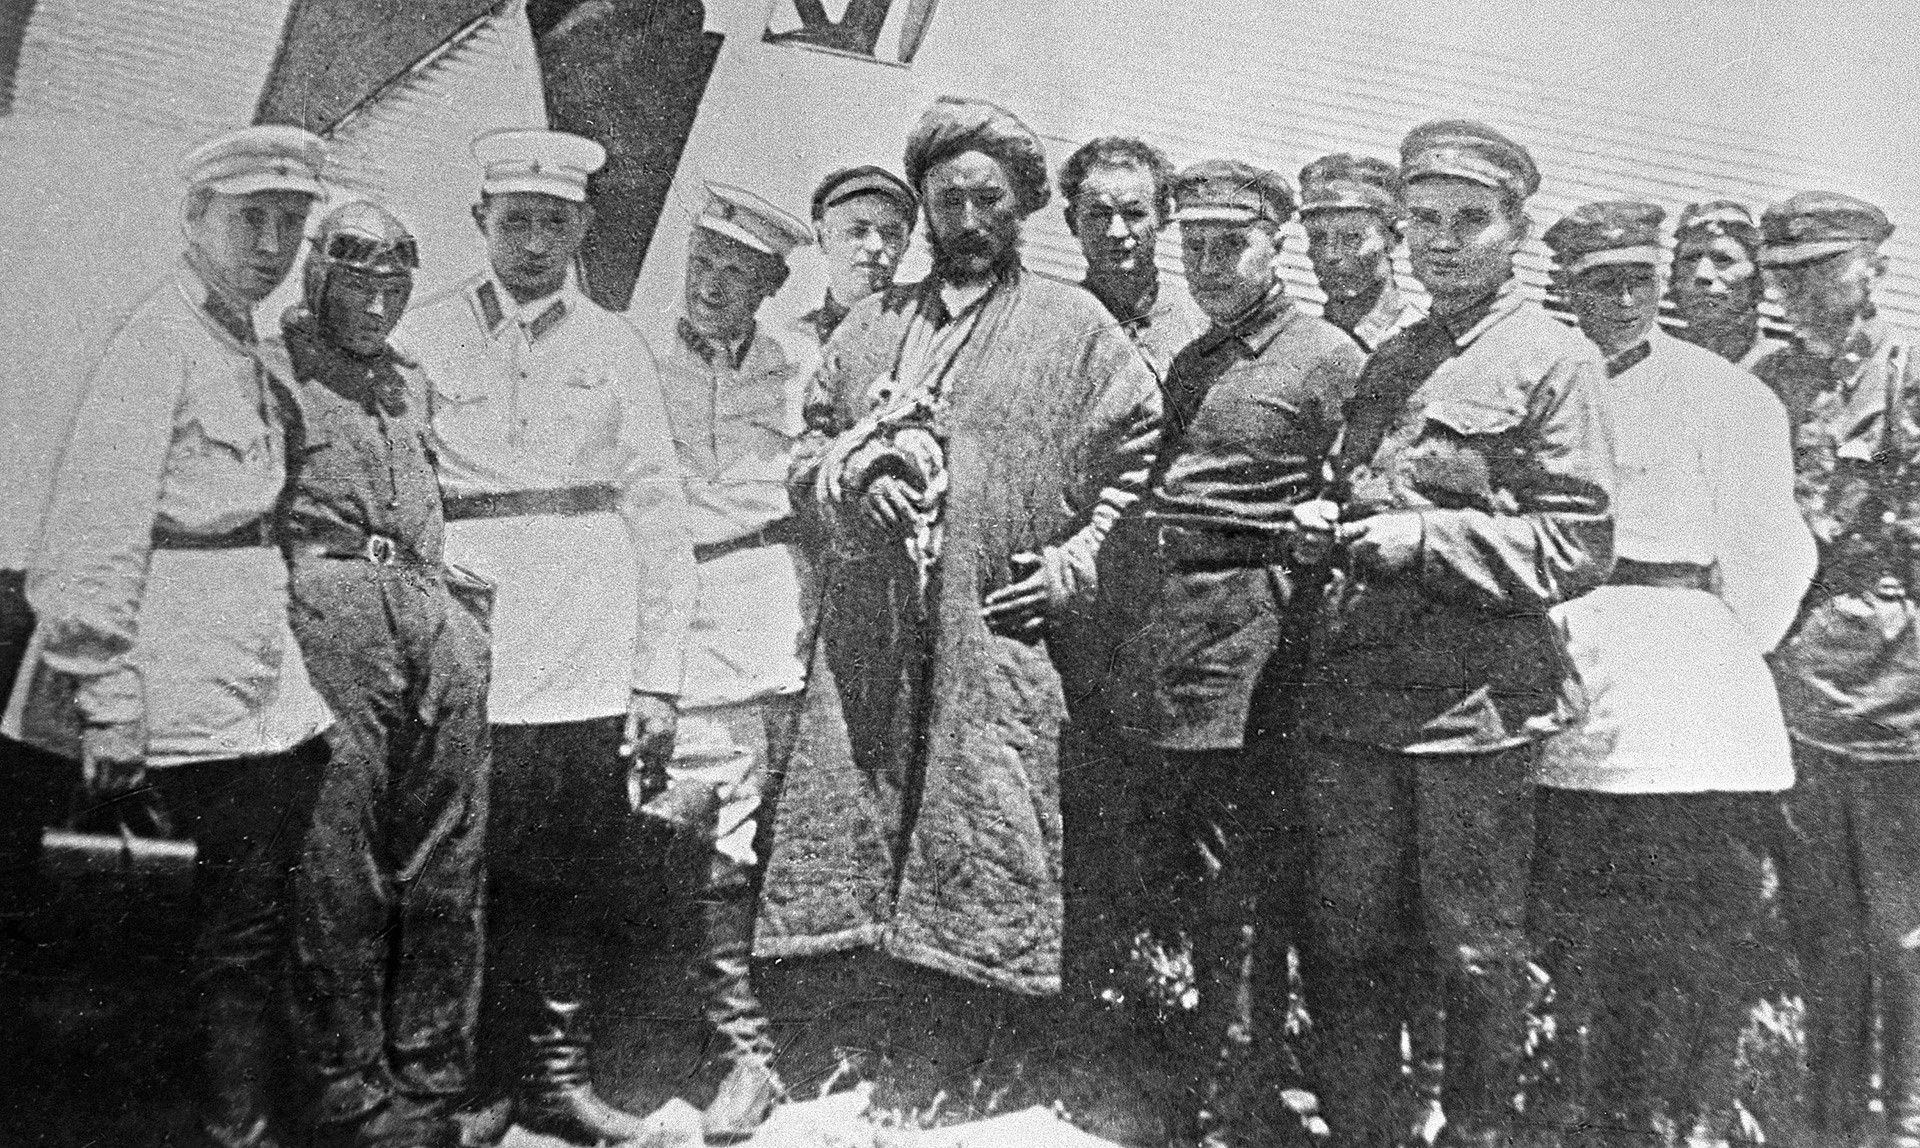 A group of the OGPU officers with captured Ibrahim Bek (center), leader of the Basmachi rebels.